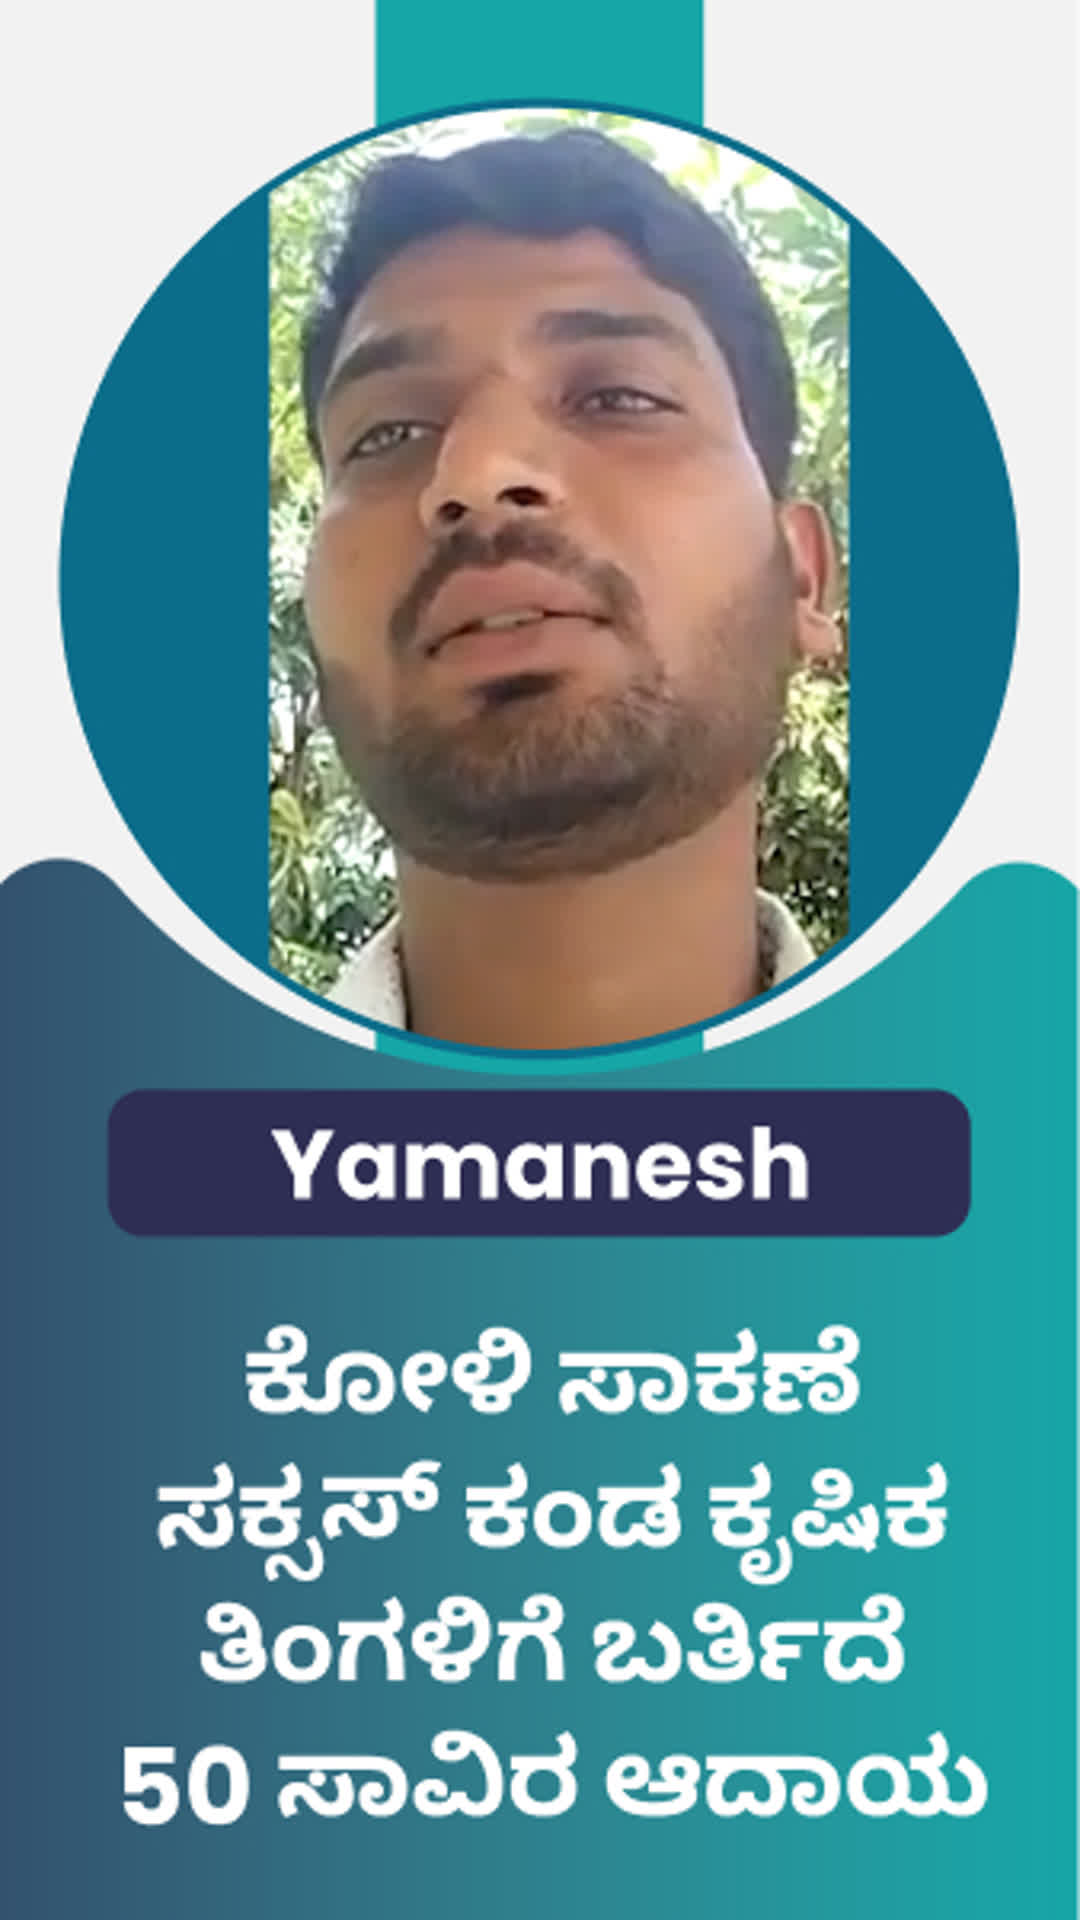 Yamanesh's Honest Review of ffreedom app - Kalaburagi ,Karnataka